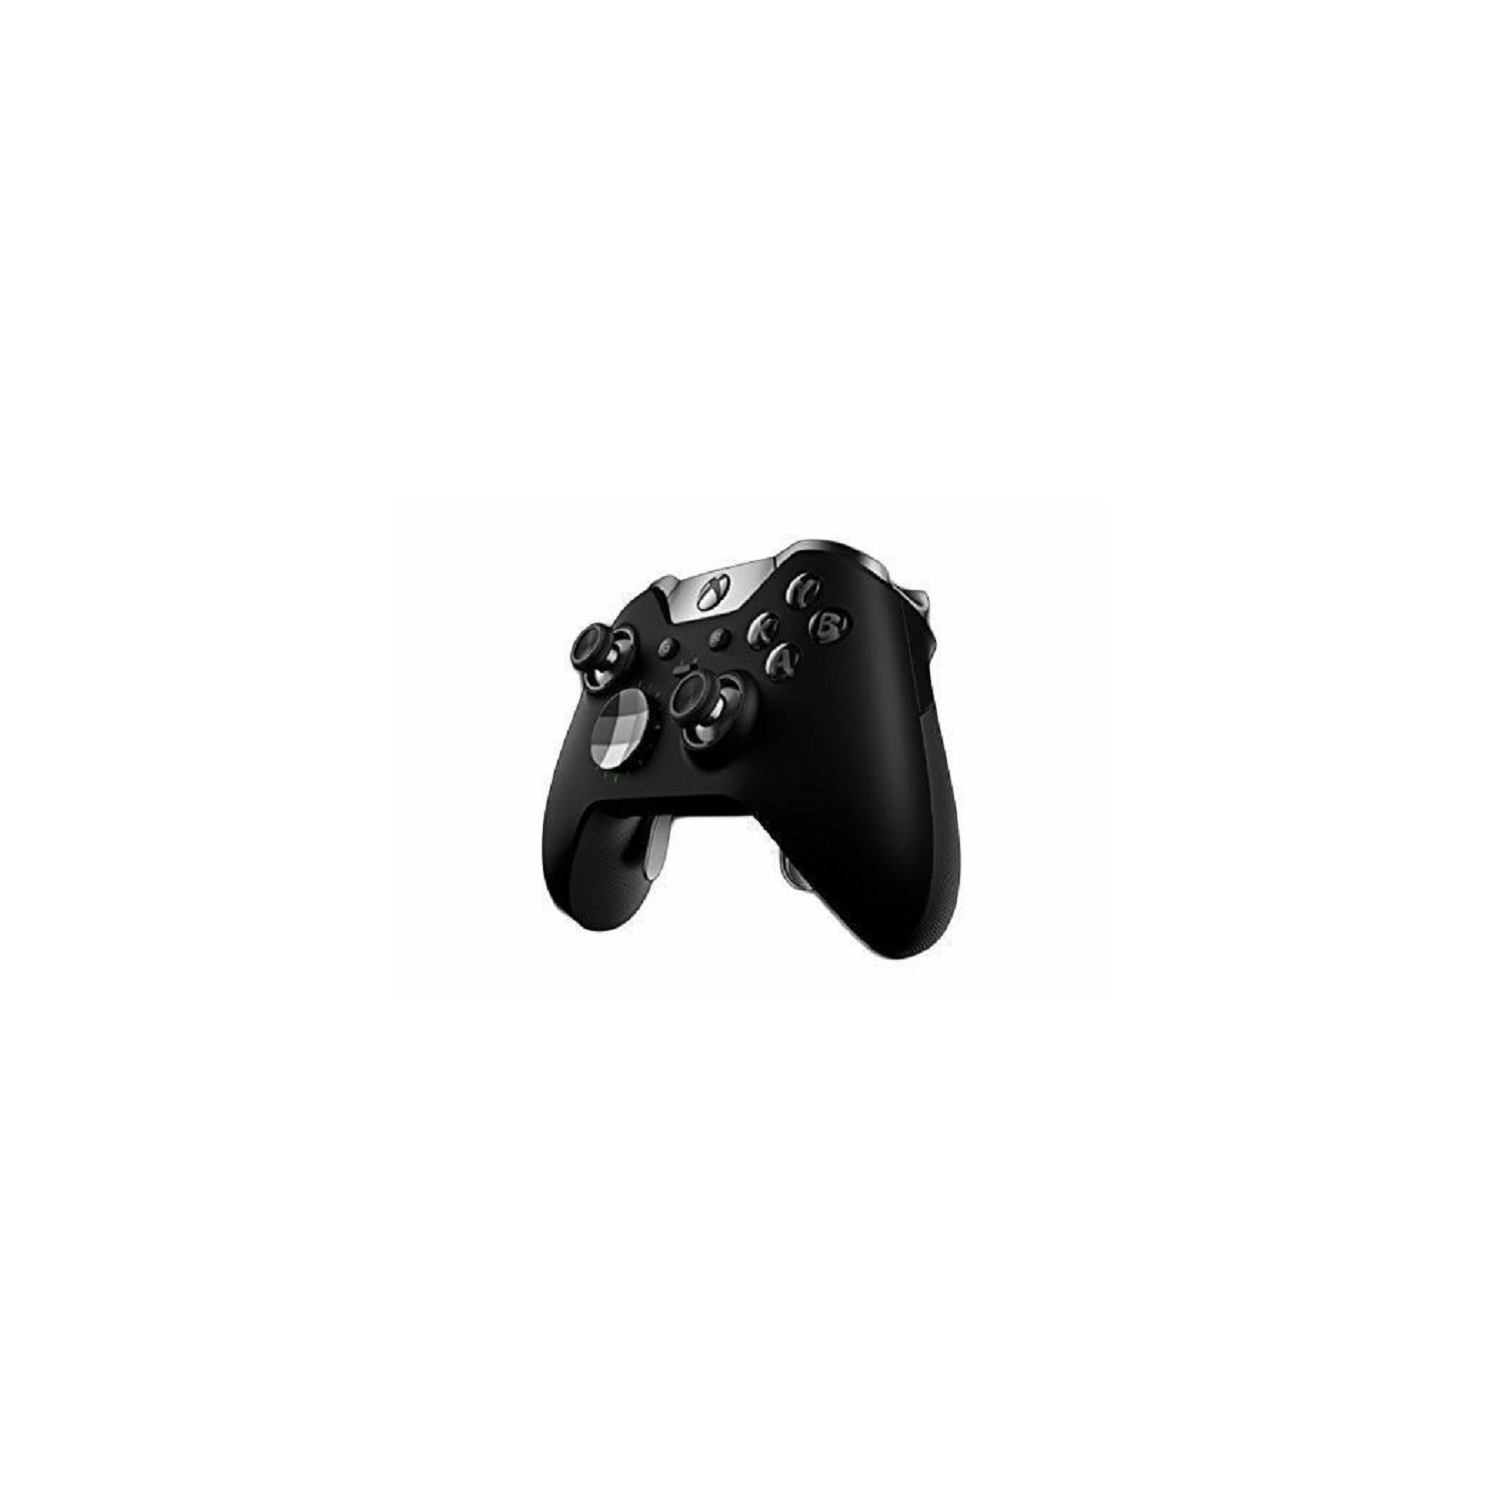 Refurbished (Excellent) - Microsoft Xbox One Elite Wireless Controller Black Series 1 HM3-00001